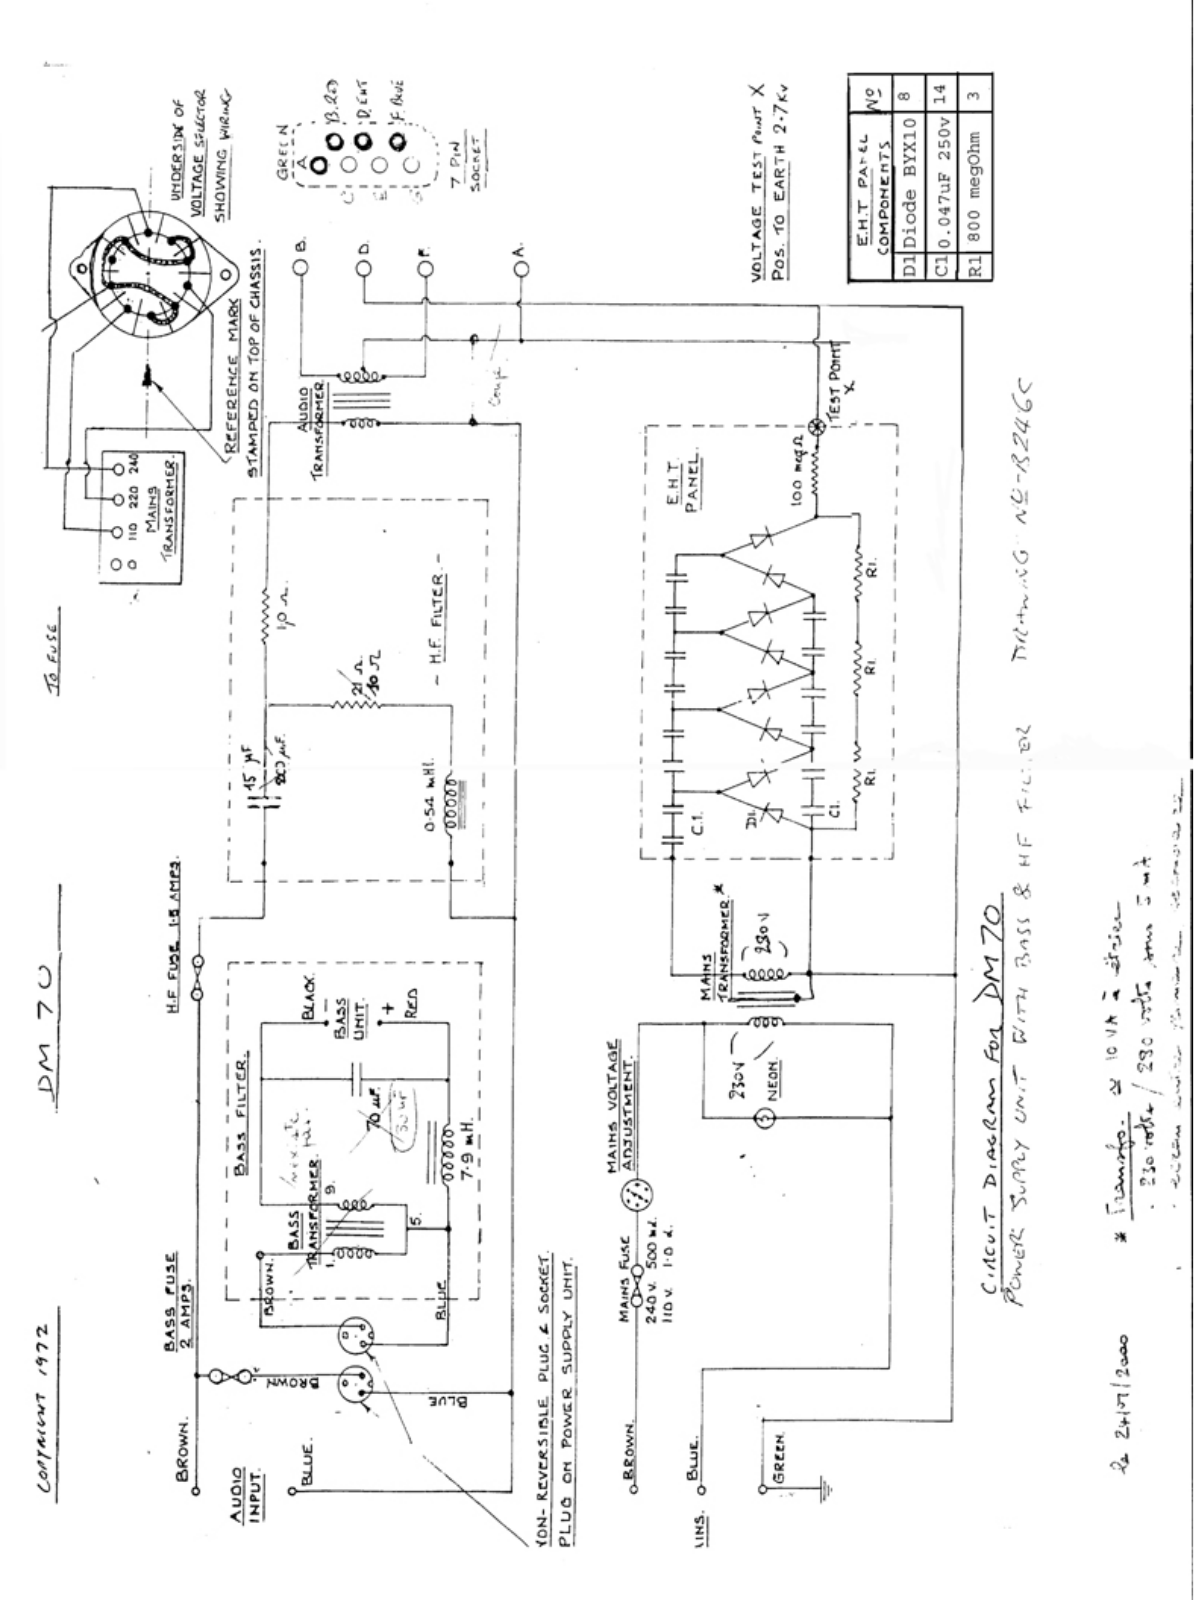 Sony SS-7000, DM-70 Schematic